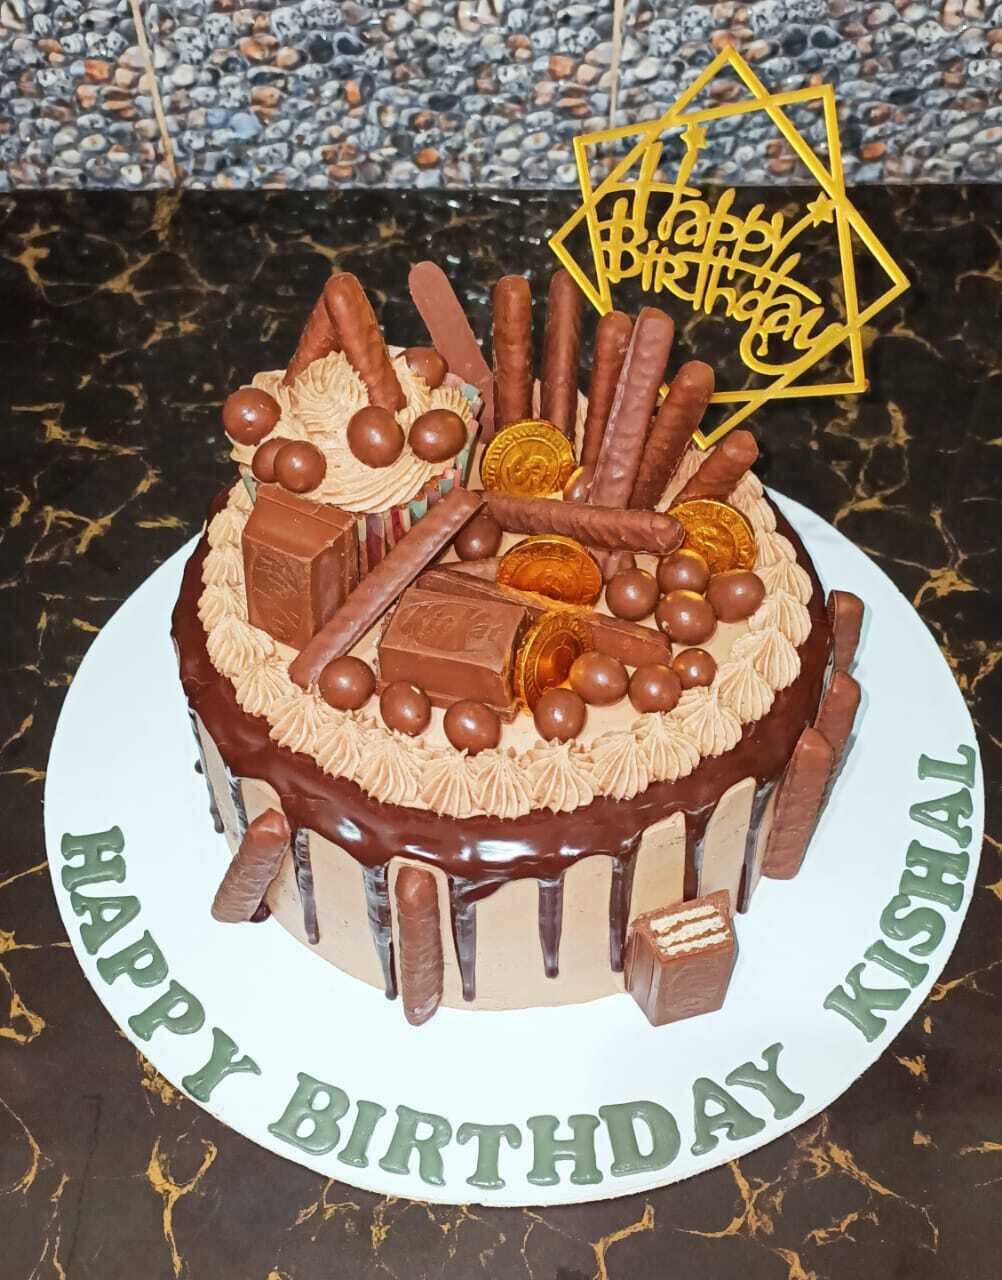 Chocolate covered cake